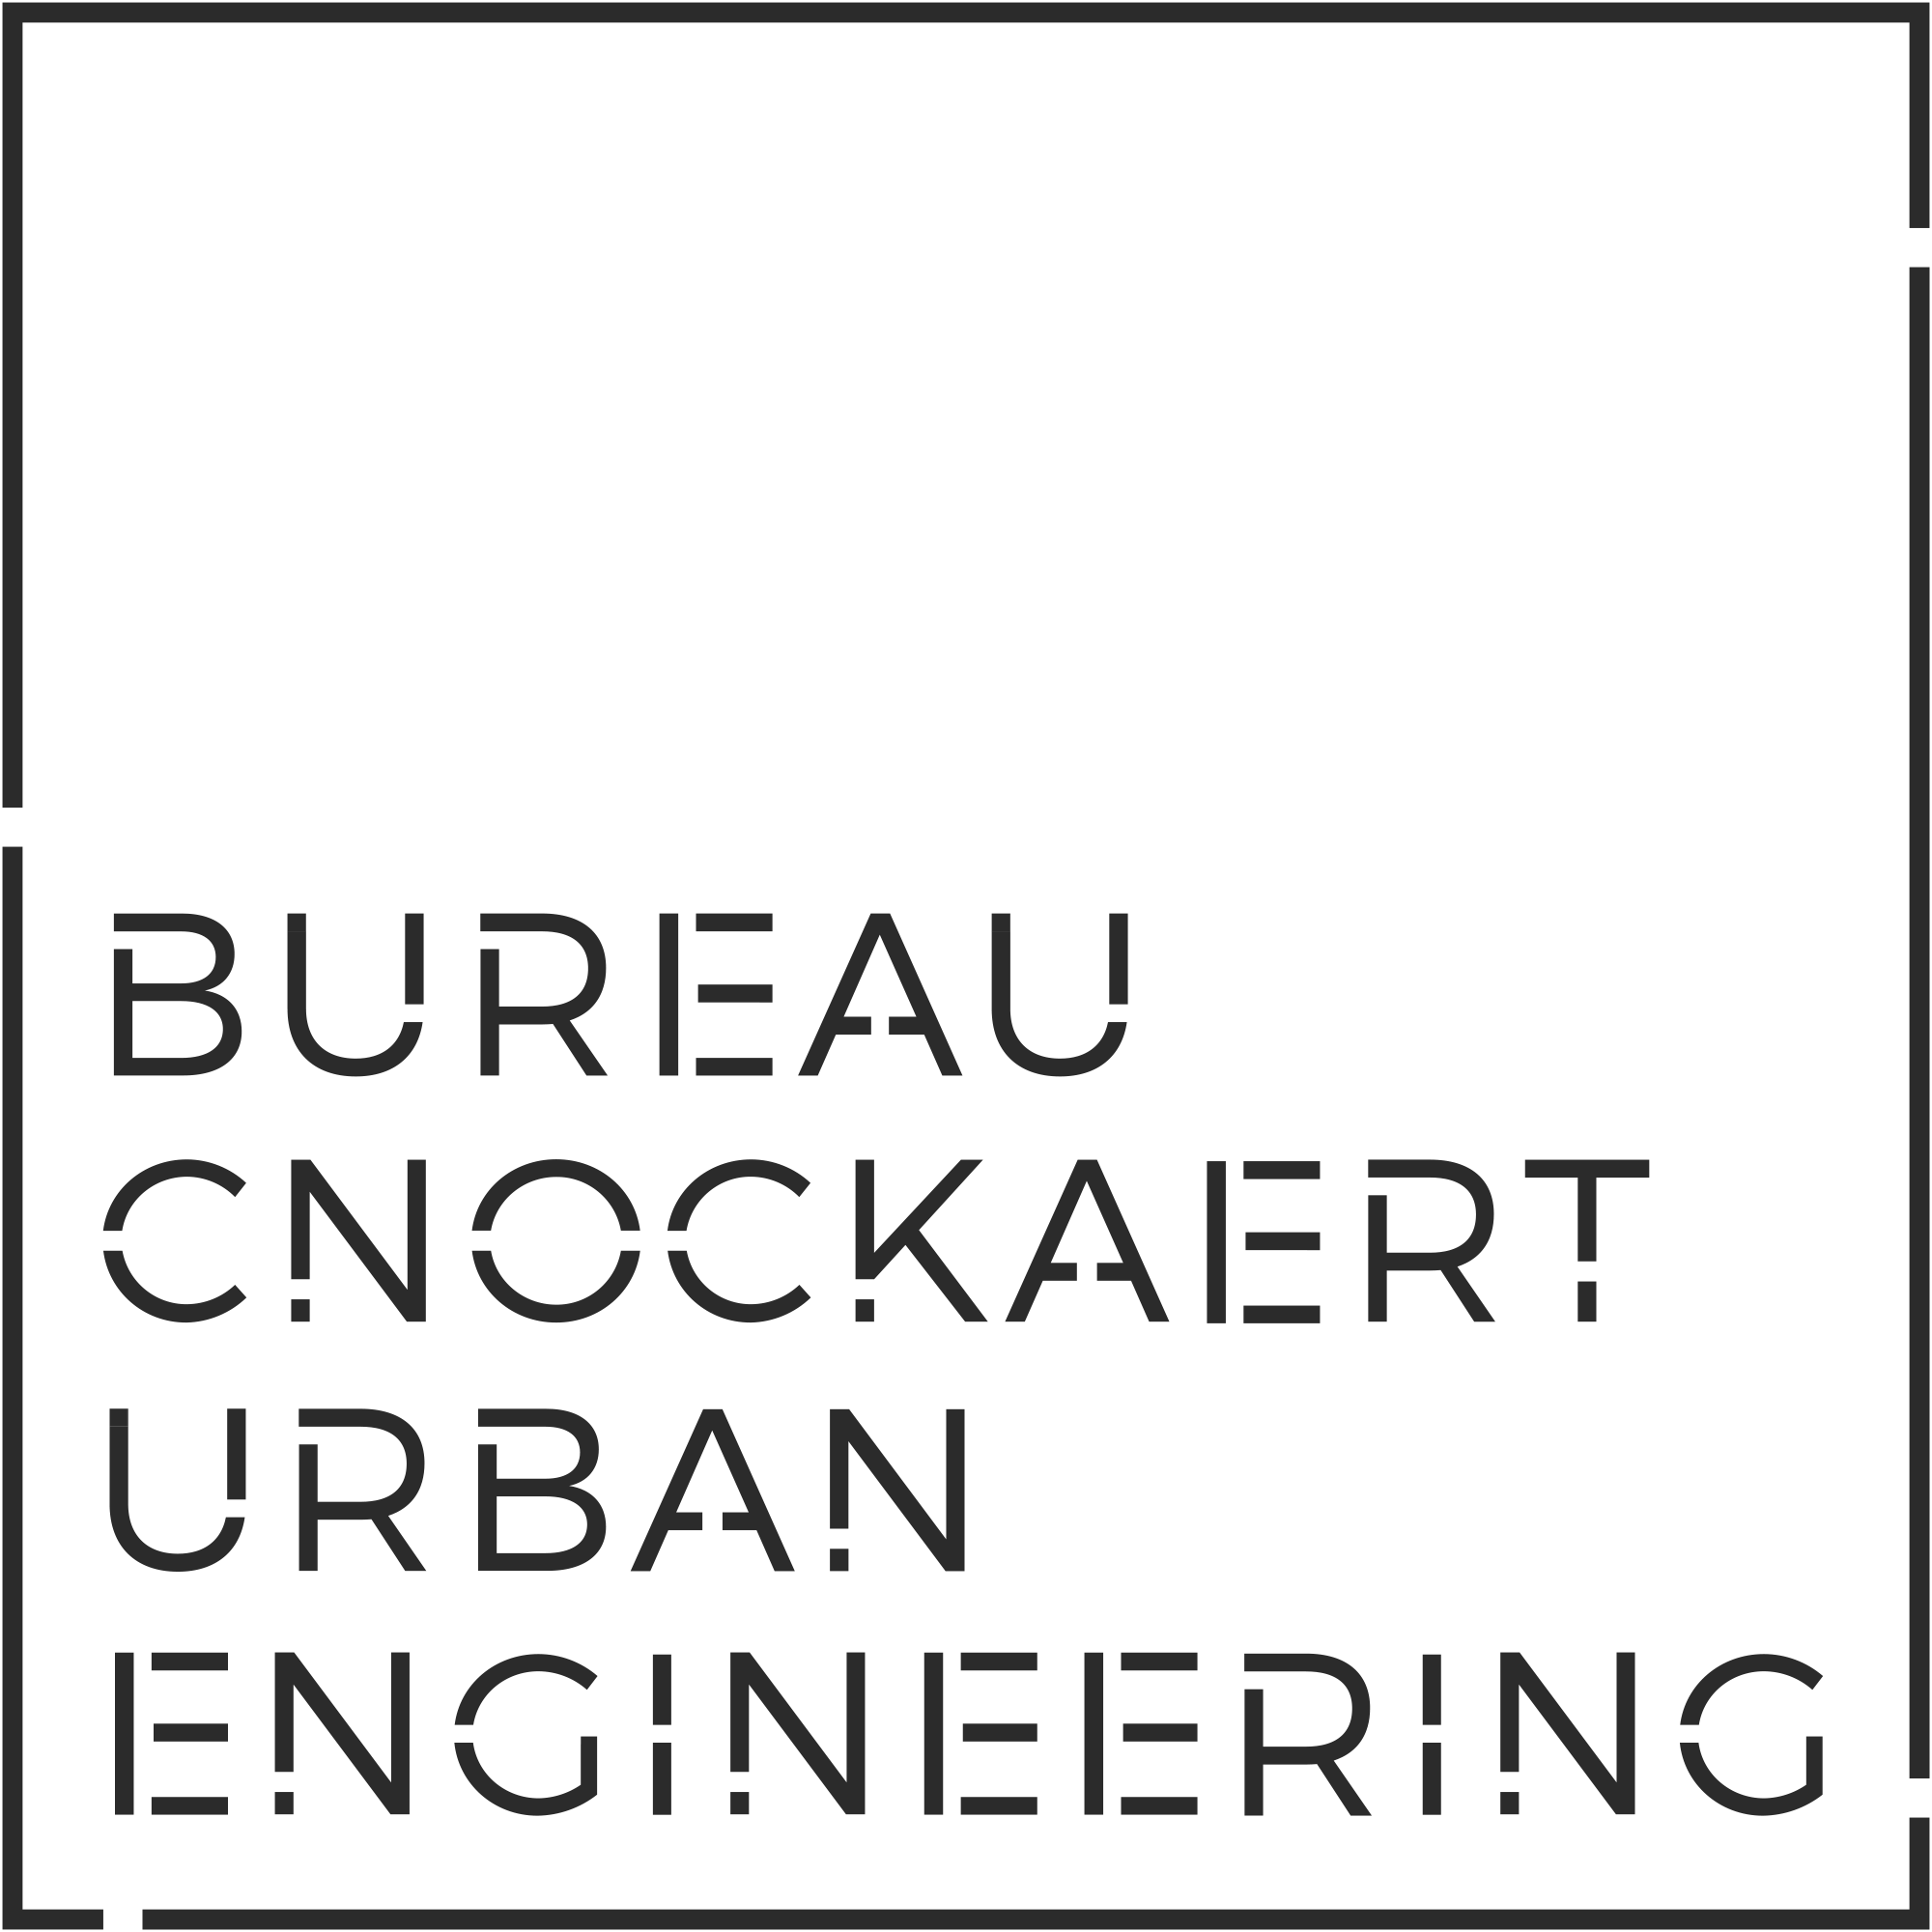 Bureau Cnockaert - Urban engineering